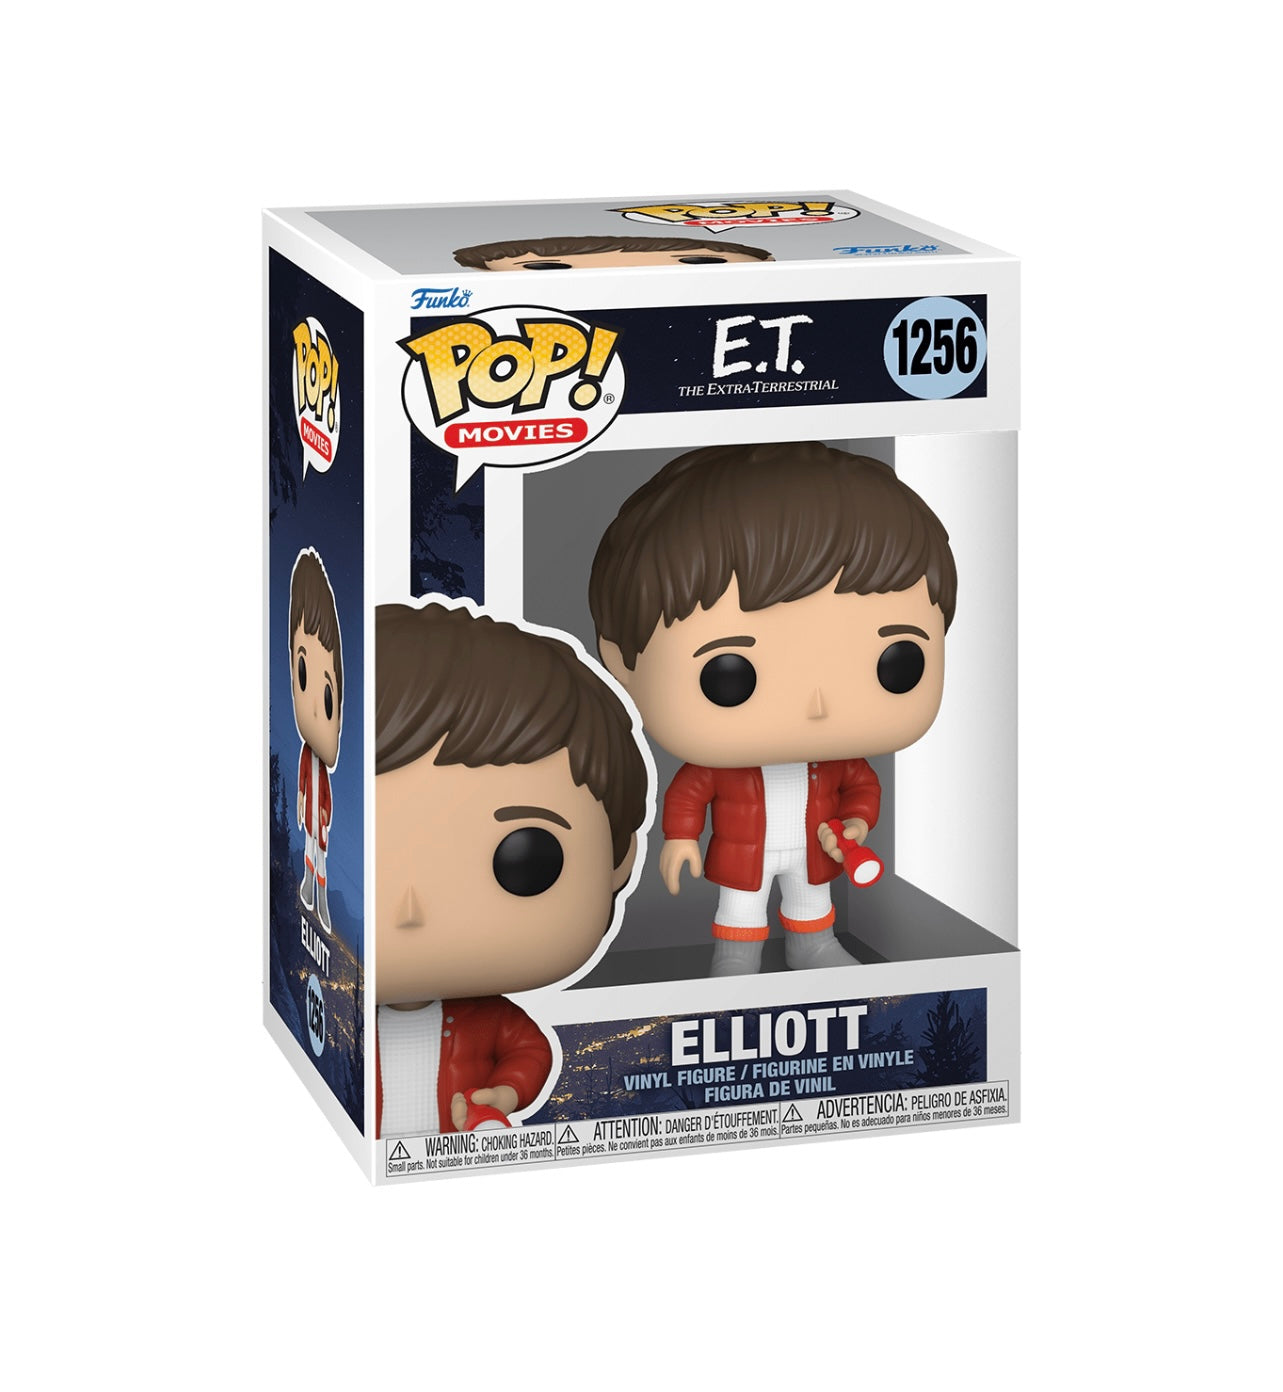 POP! Movies E.T. Elliott #1256